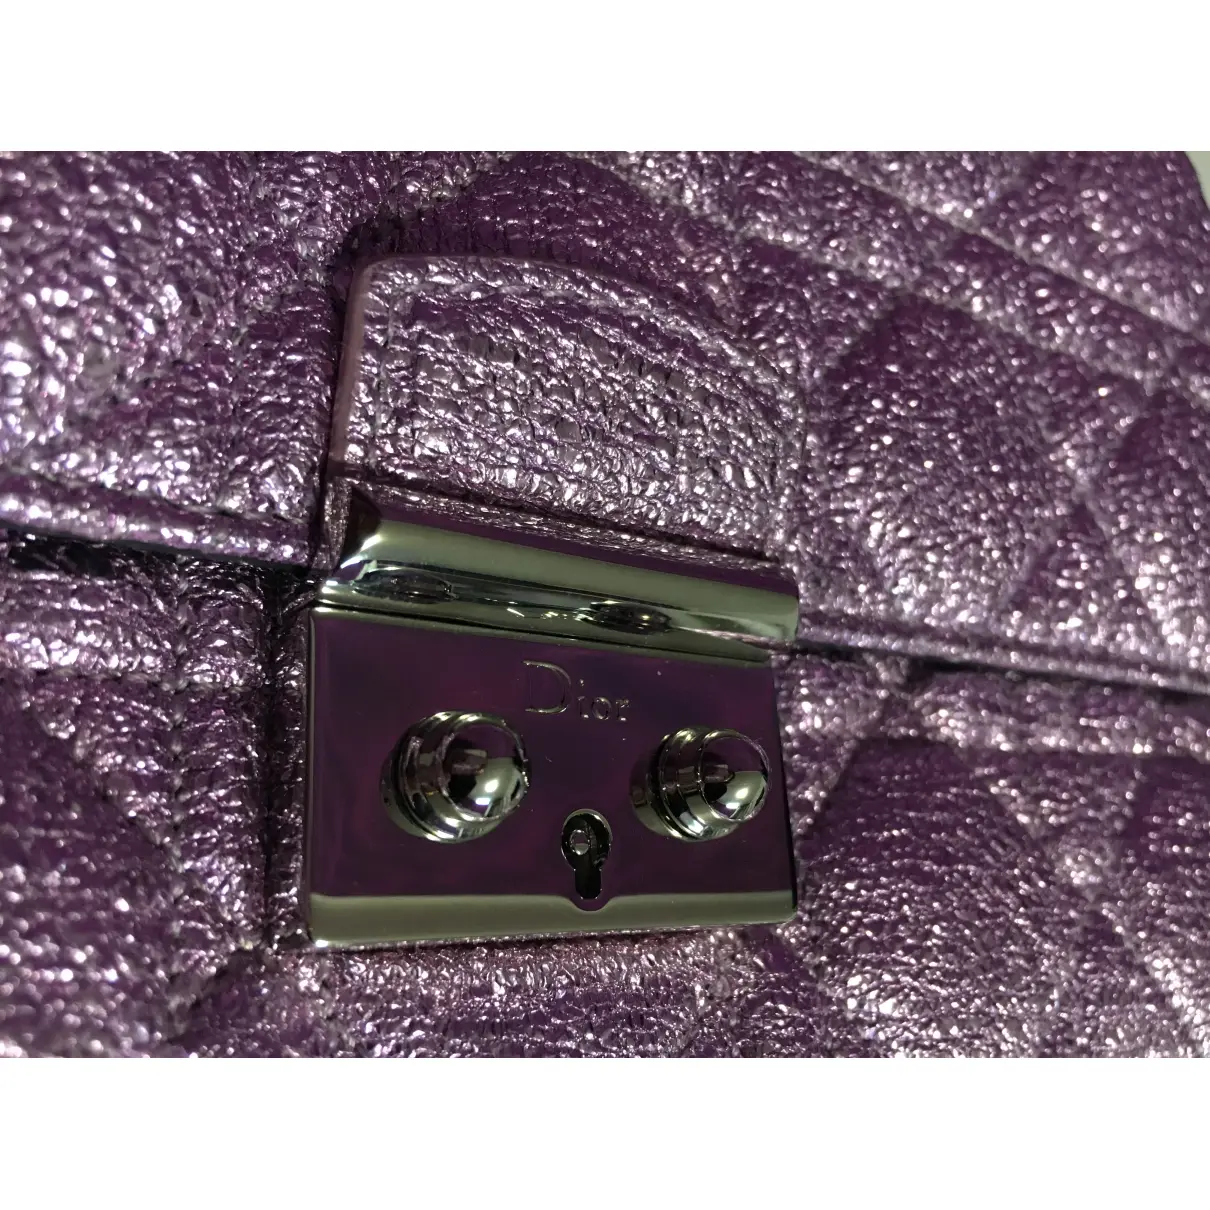 Buy Dior Miss Dior leather handbag online